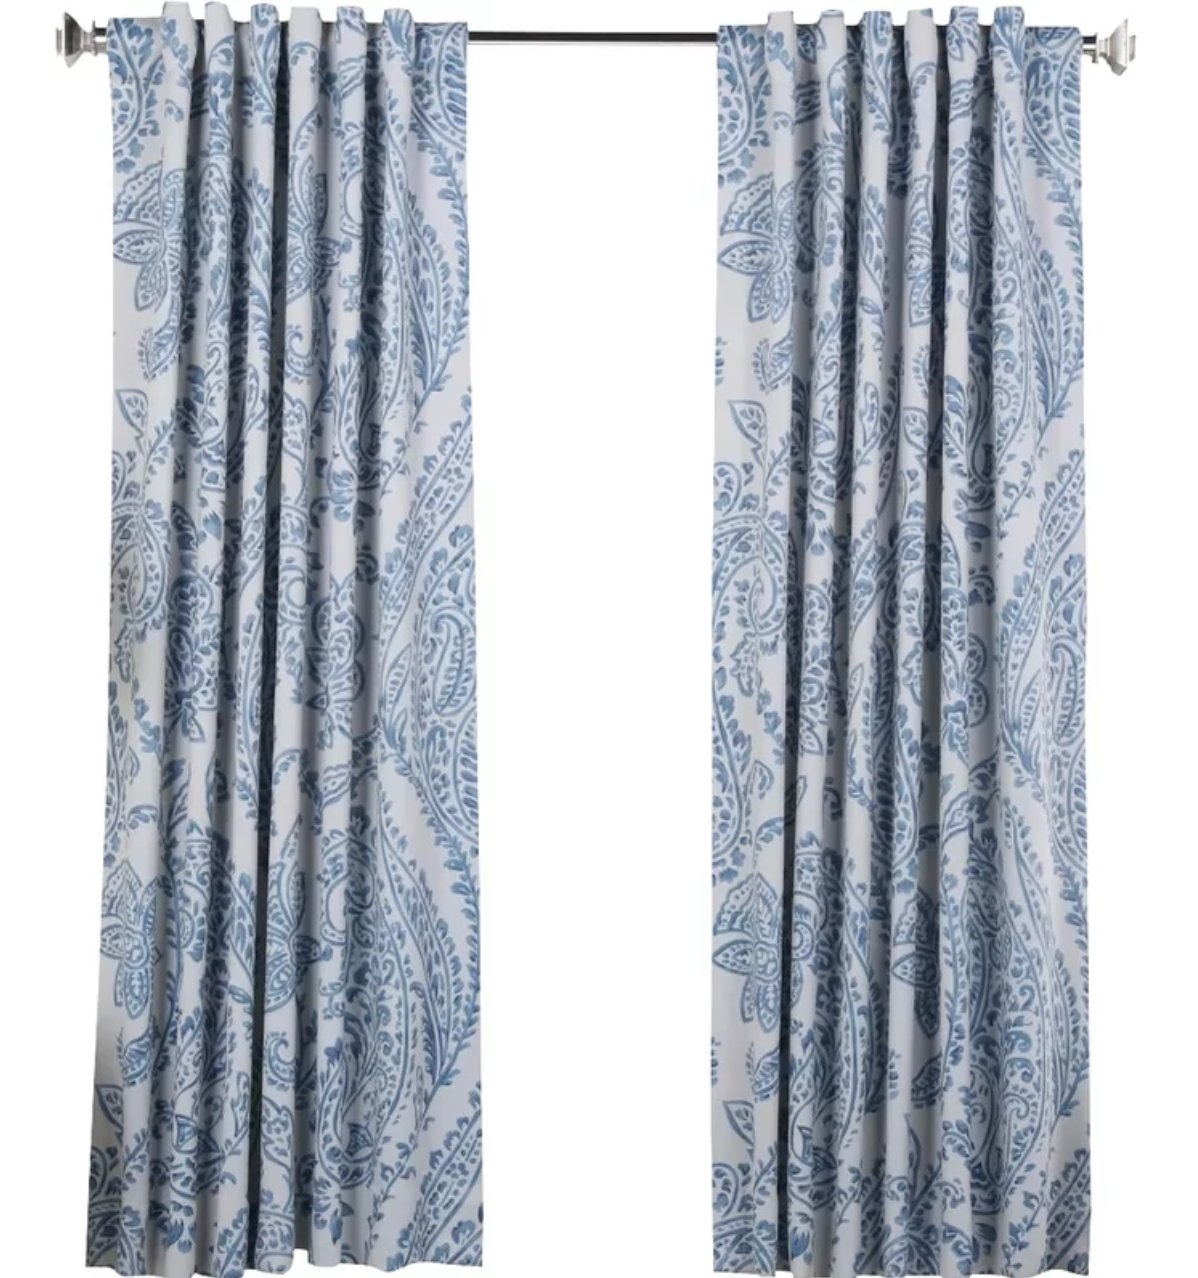 Bryton Paisley Room Darkening Thermal Rod Pocket Single Curtain Panel, Tea Time China Blue, 50"W x 96"L - Image 0